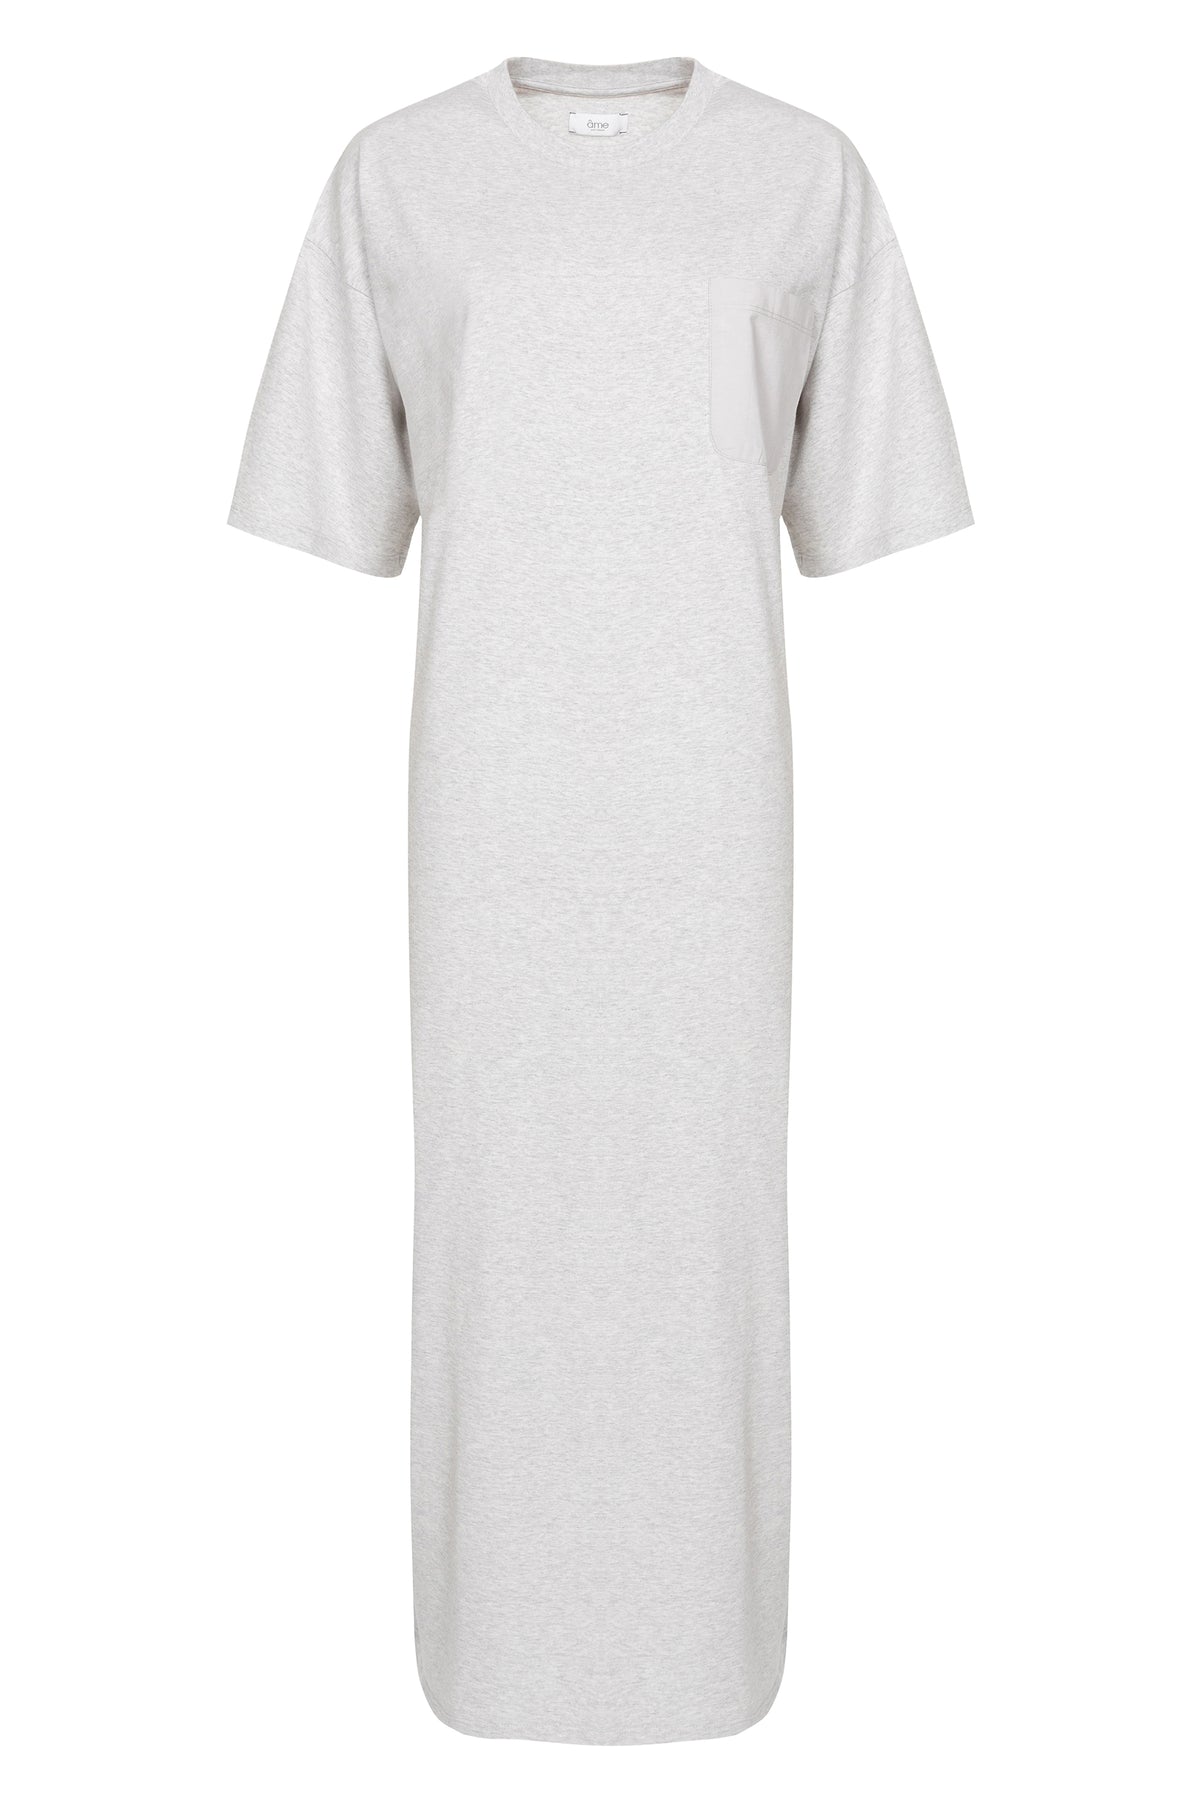 Hysaline T-shirt Dress | Marled Grey